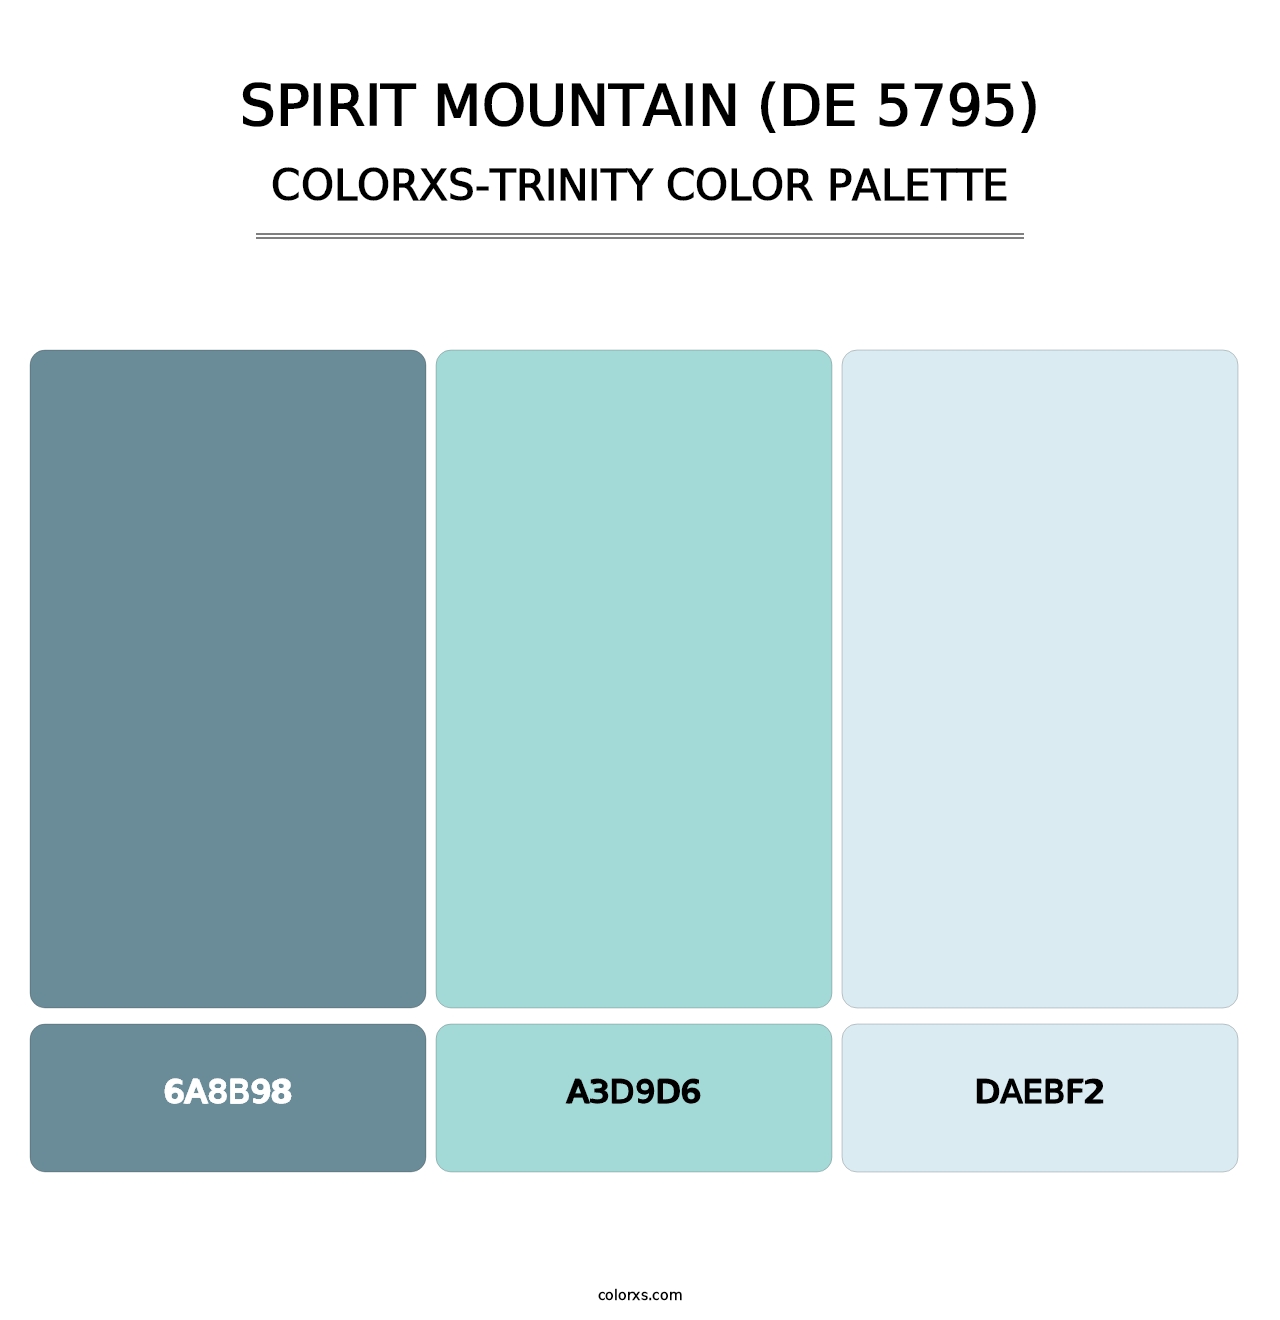 Spirit Mountain (DE 5795) - Colorxs Trinity Palette